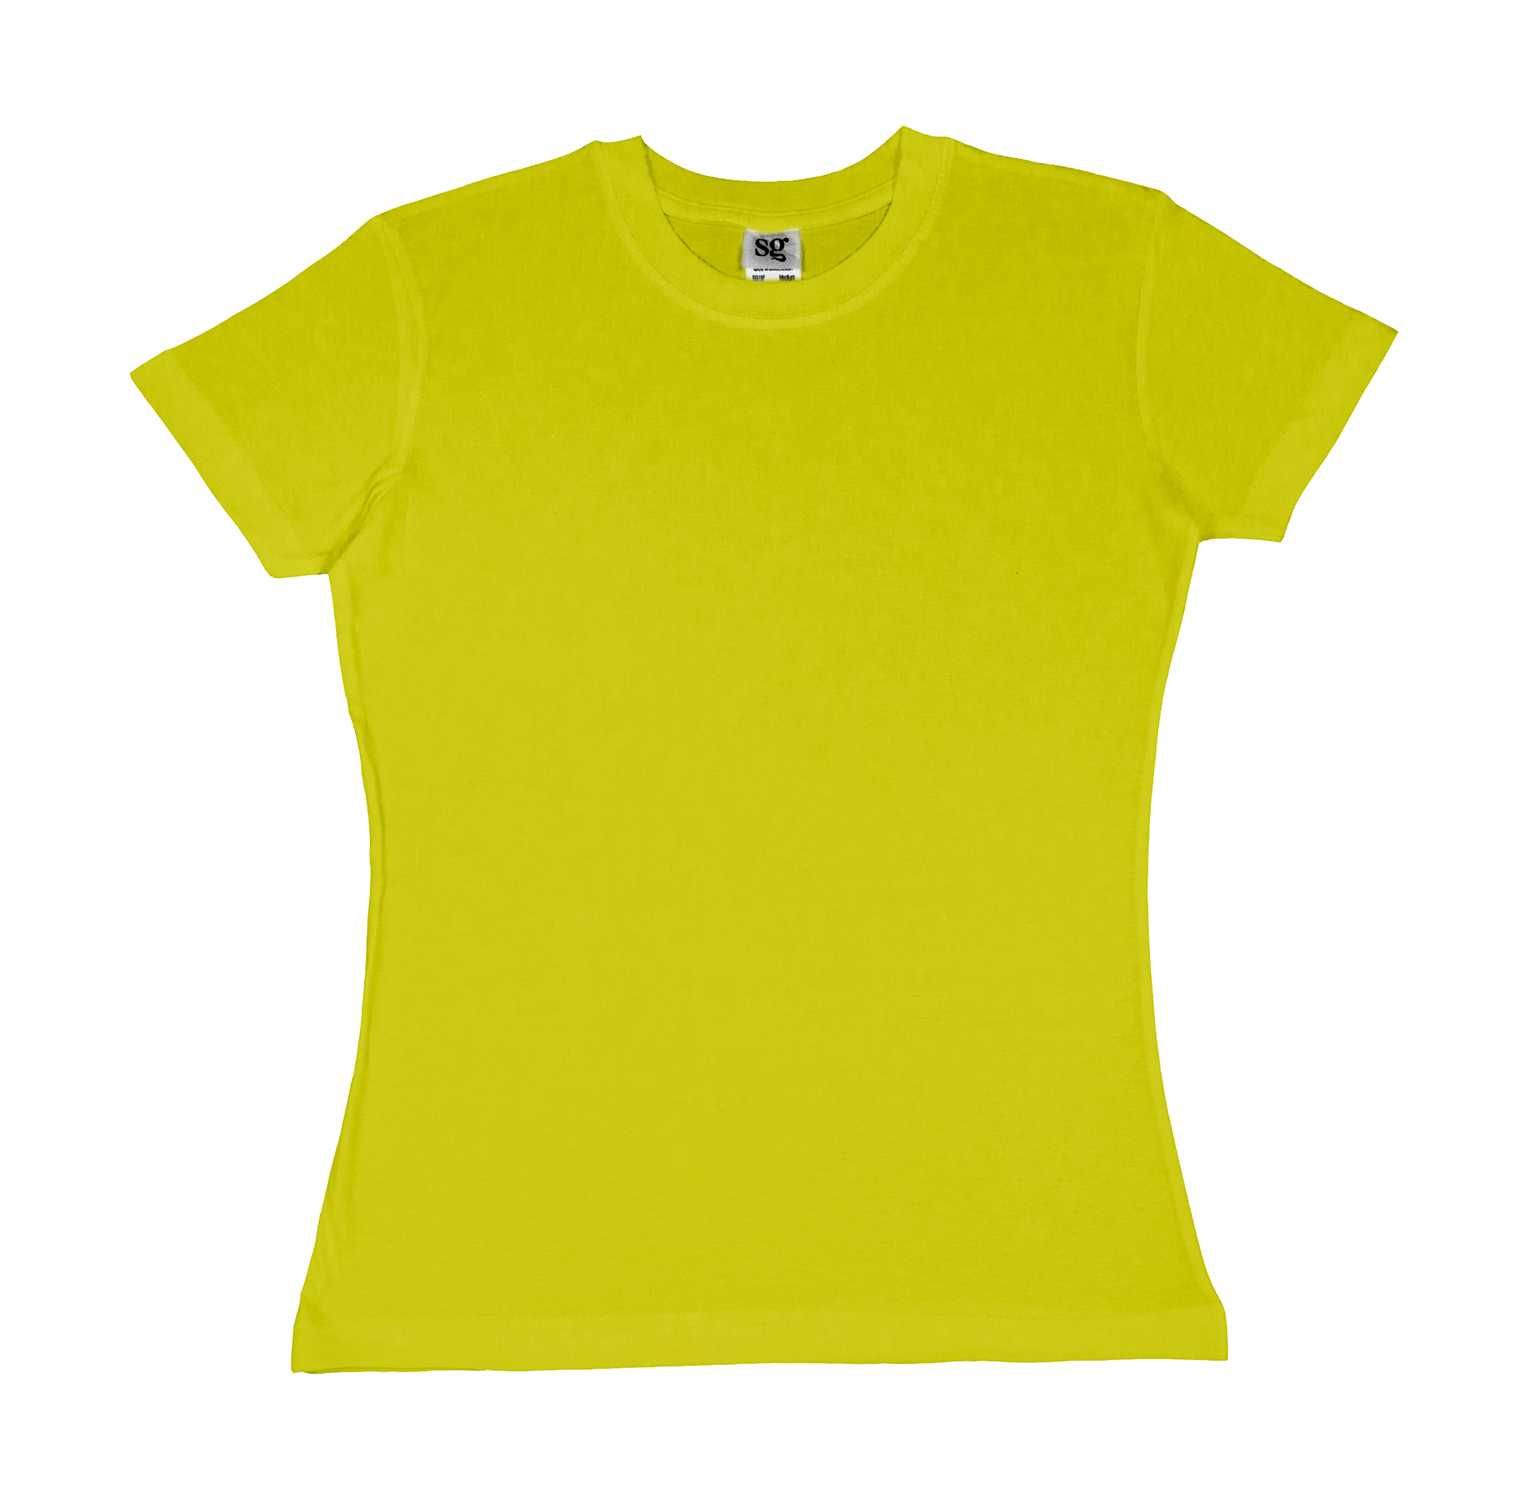 Koszulka damska SG limonkowa XL